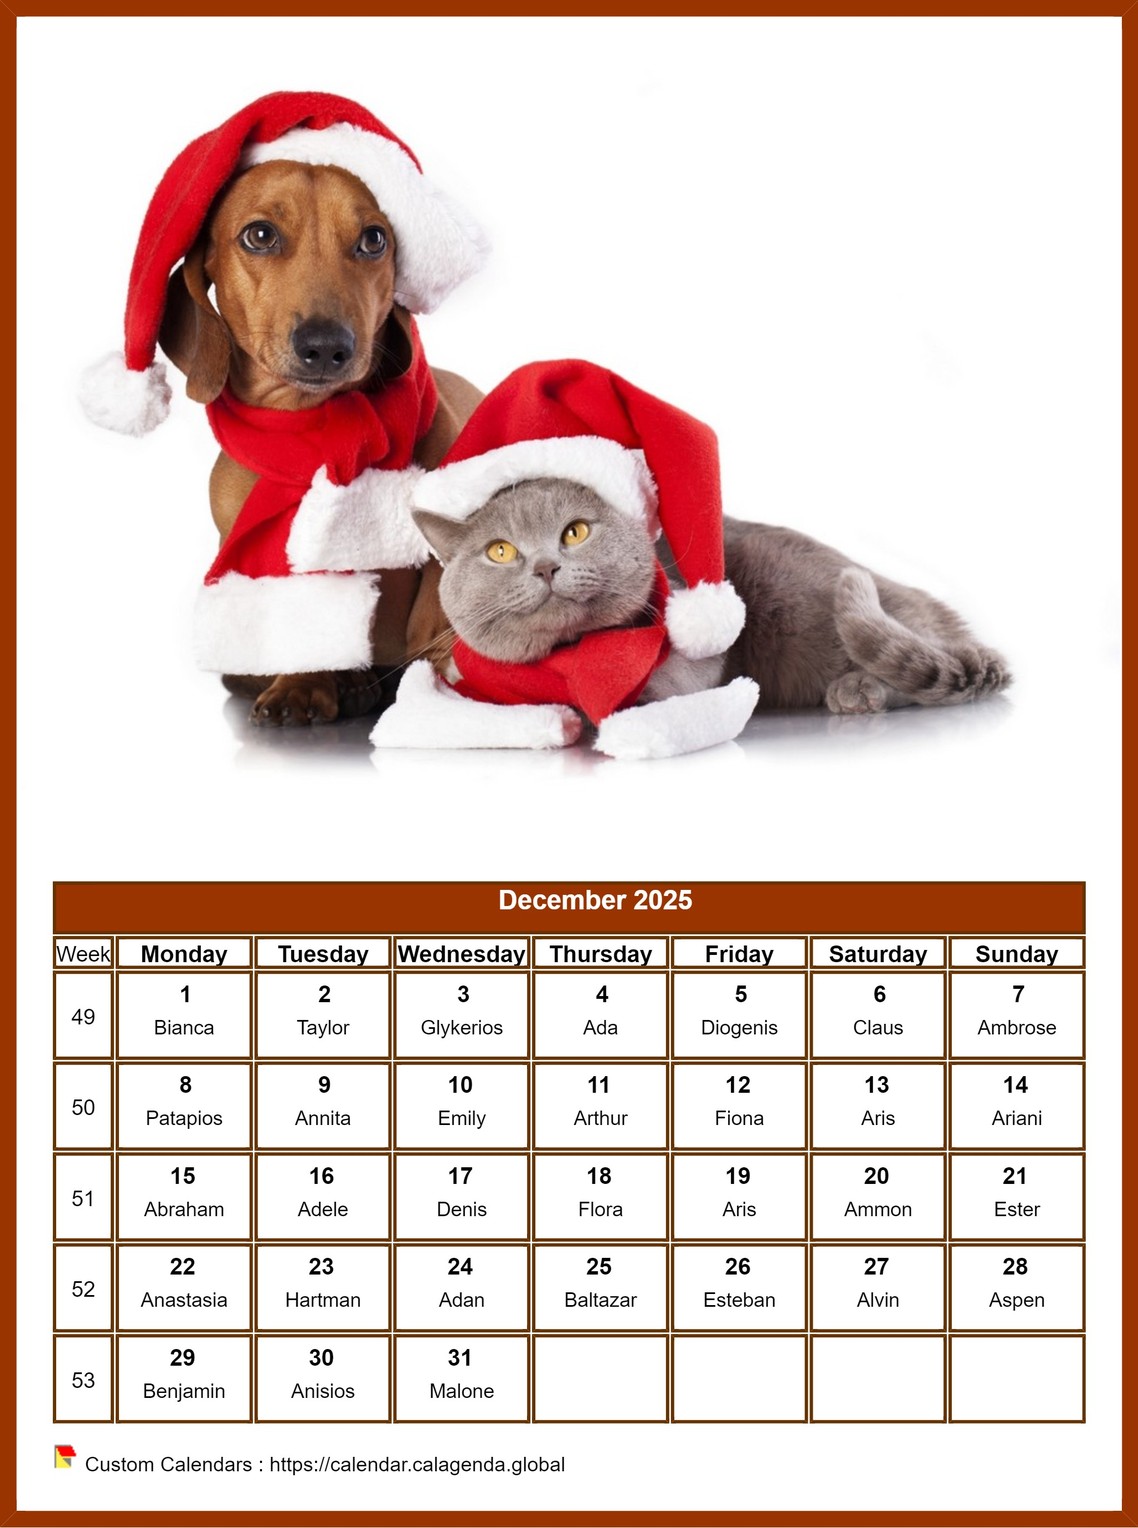 Calendar December 2025 dogs